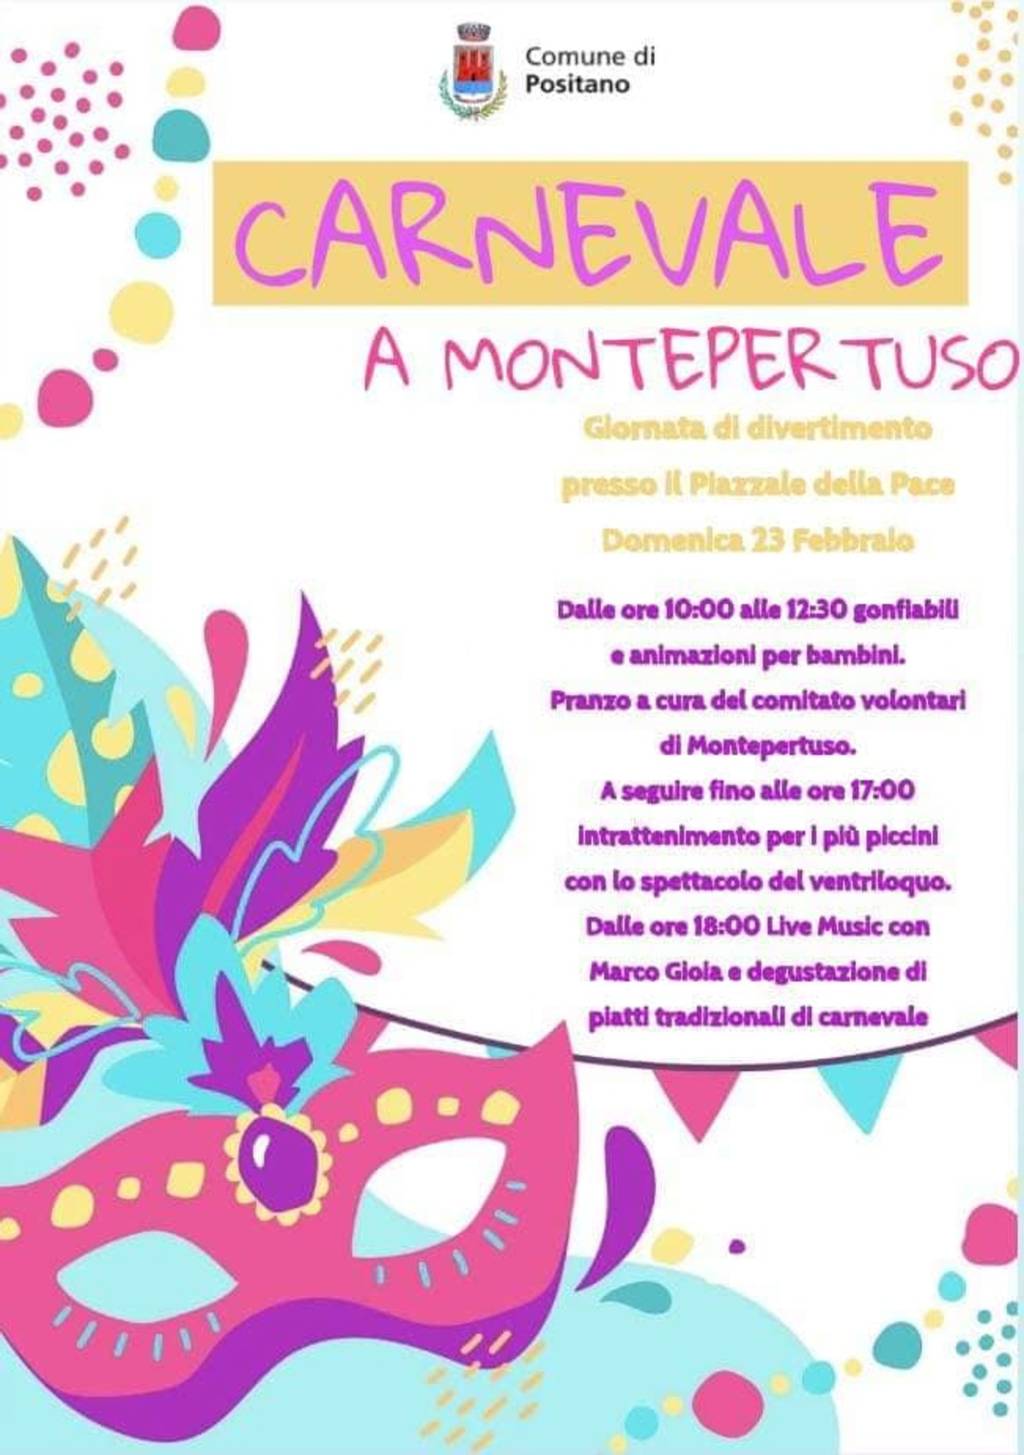 Carnevale a Montepertuso